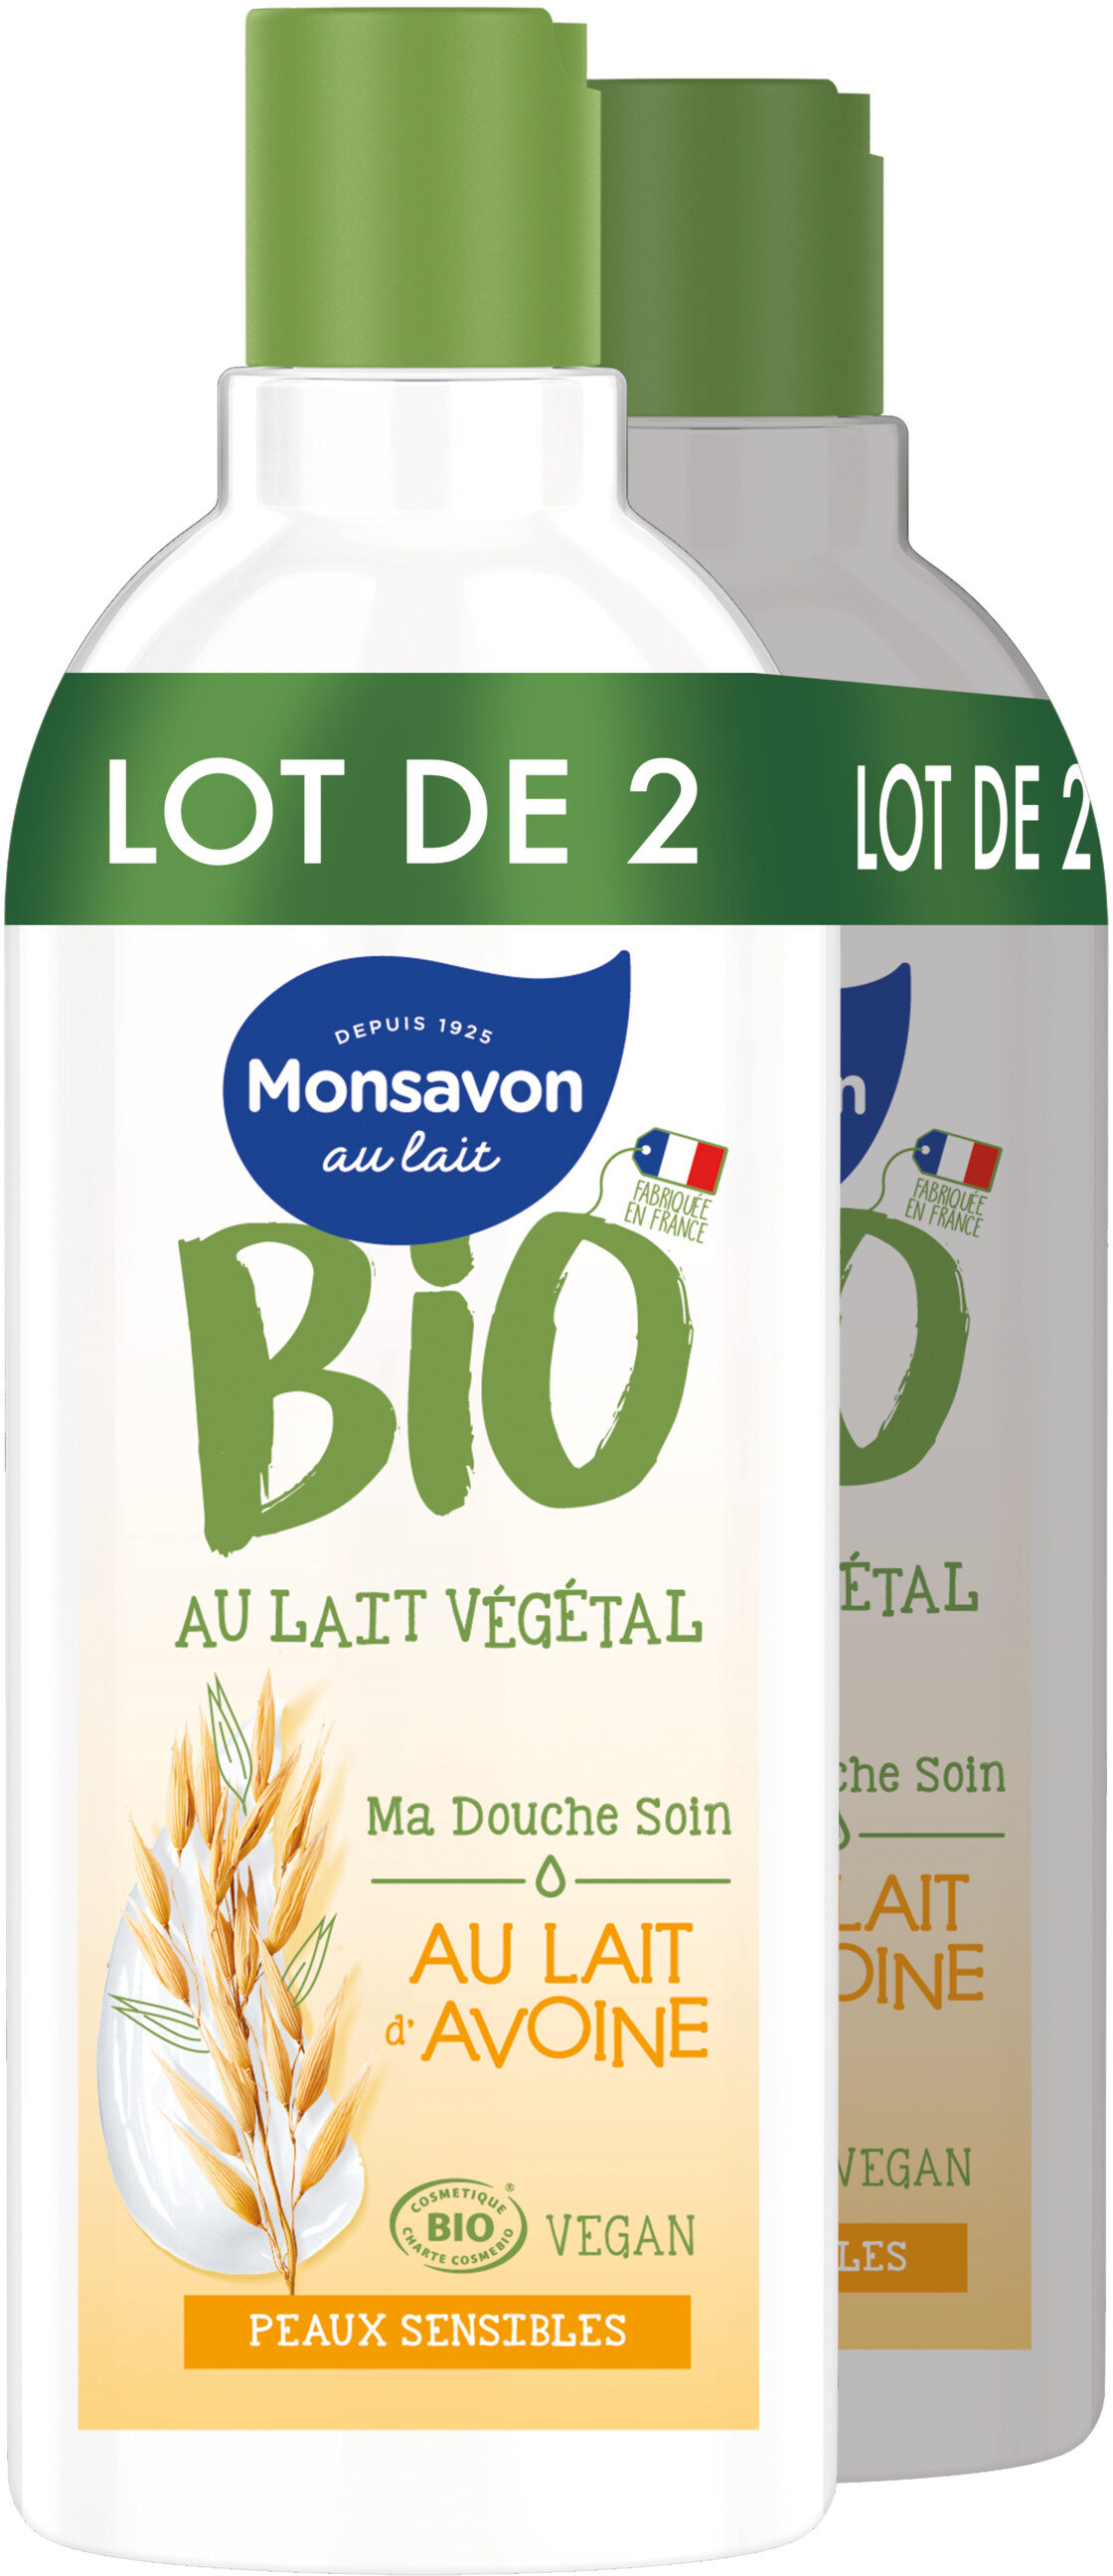 Monsavon Gel Douche Bio Vegan Lait Avoine Lot 2 x 300ml - Tuote - fr